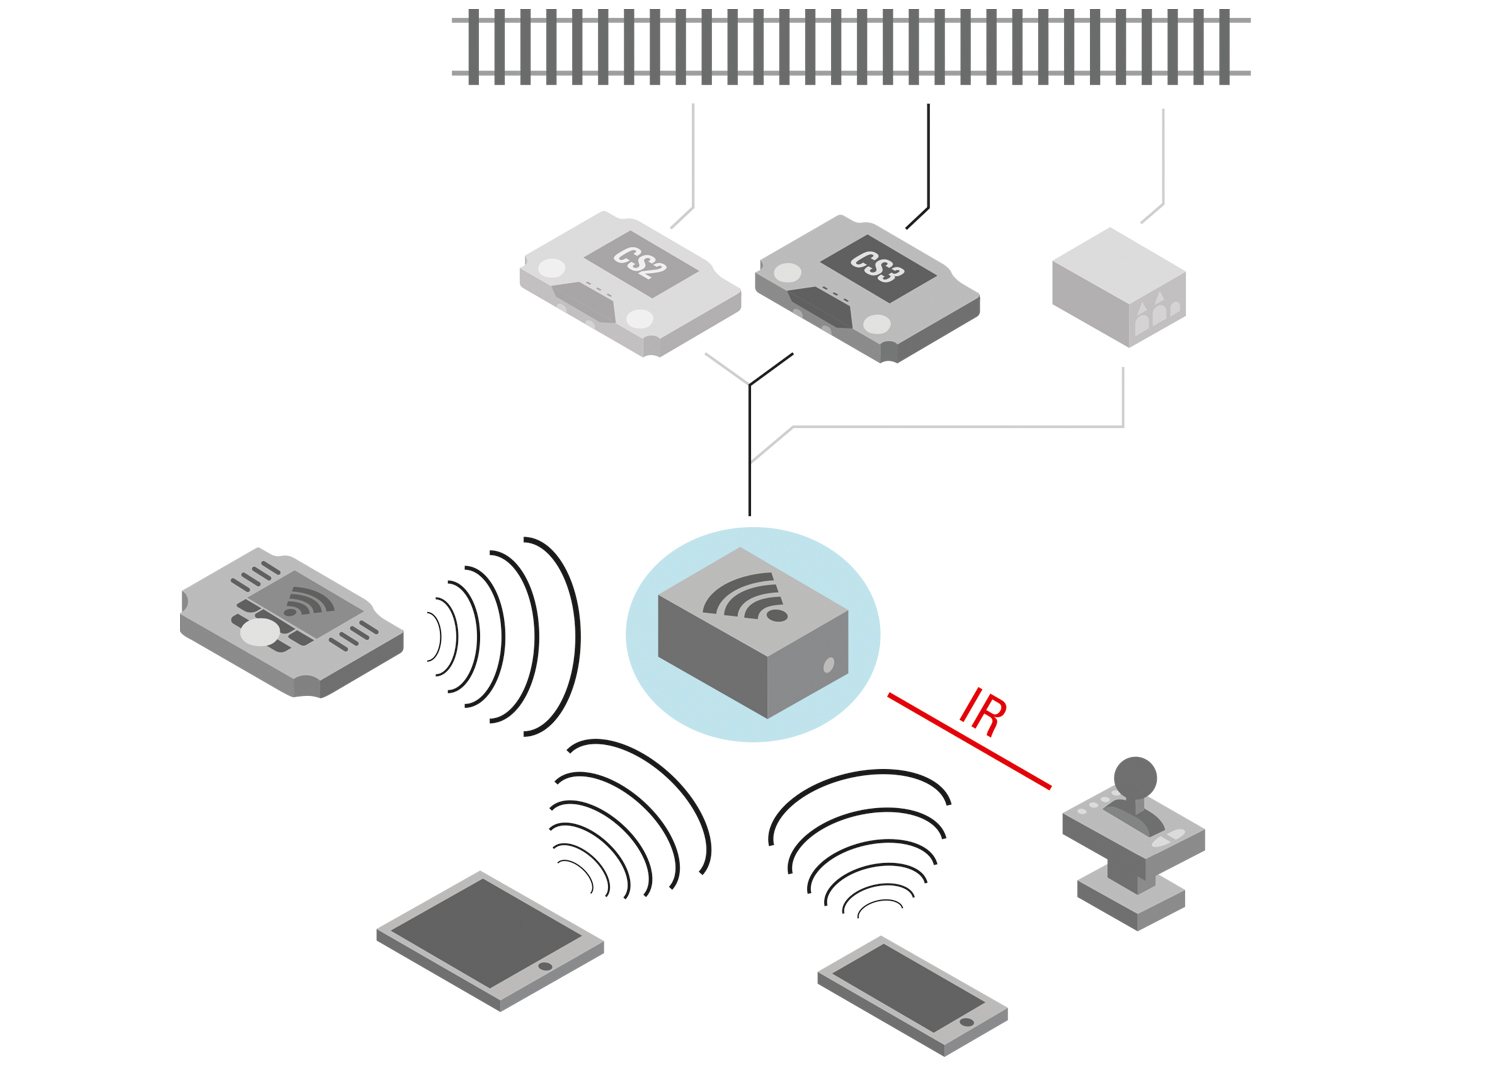 WLAN- und Infrarot-Adapter zum Betrieb an der Digital-Anschlussbox (60114 oder 60116).